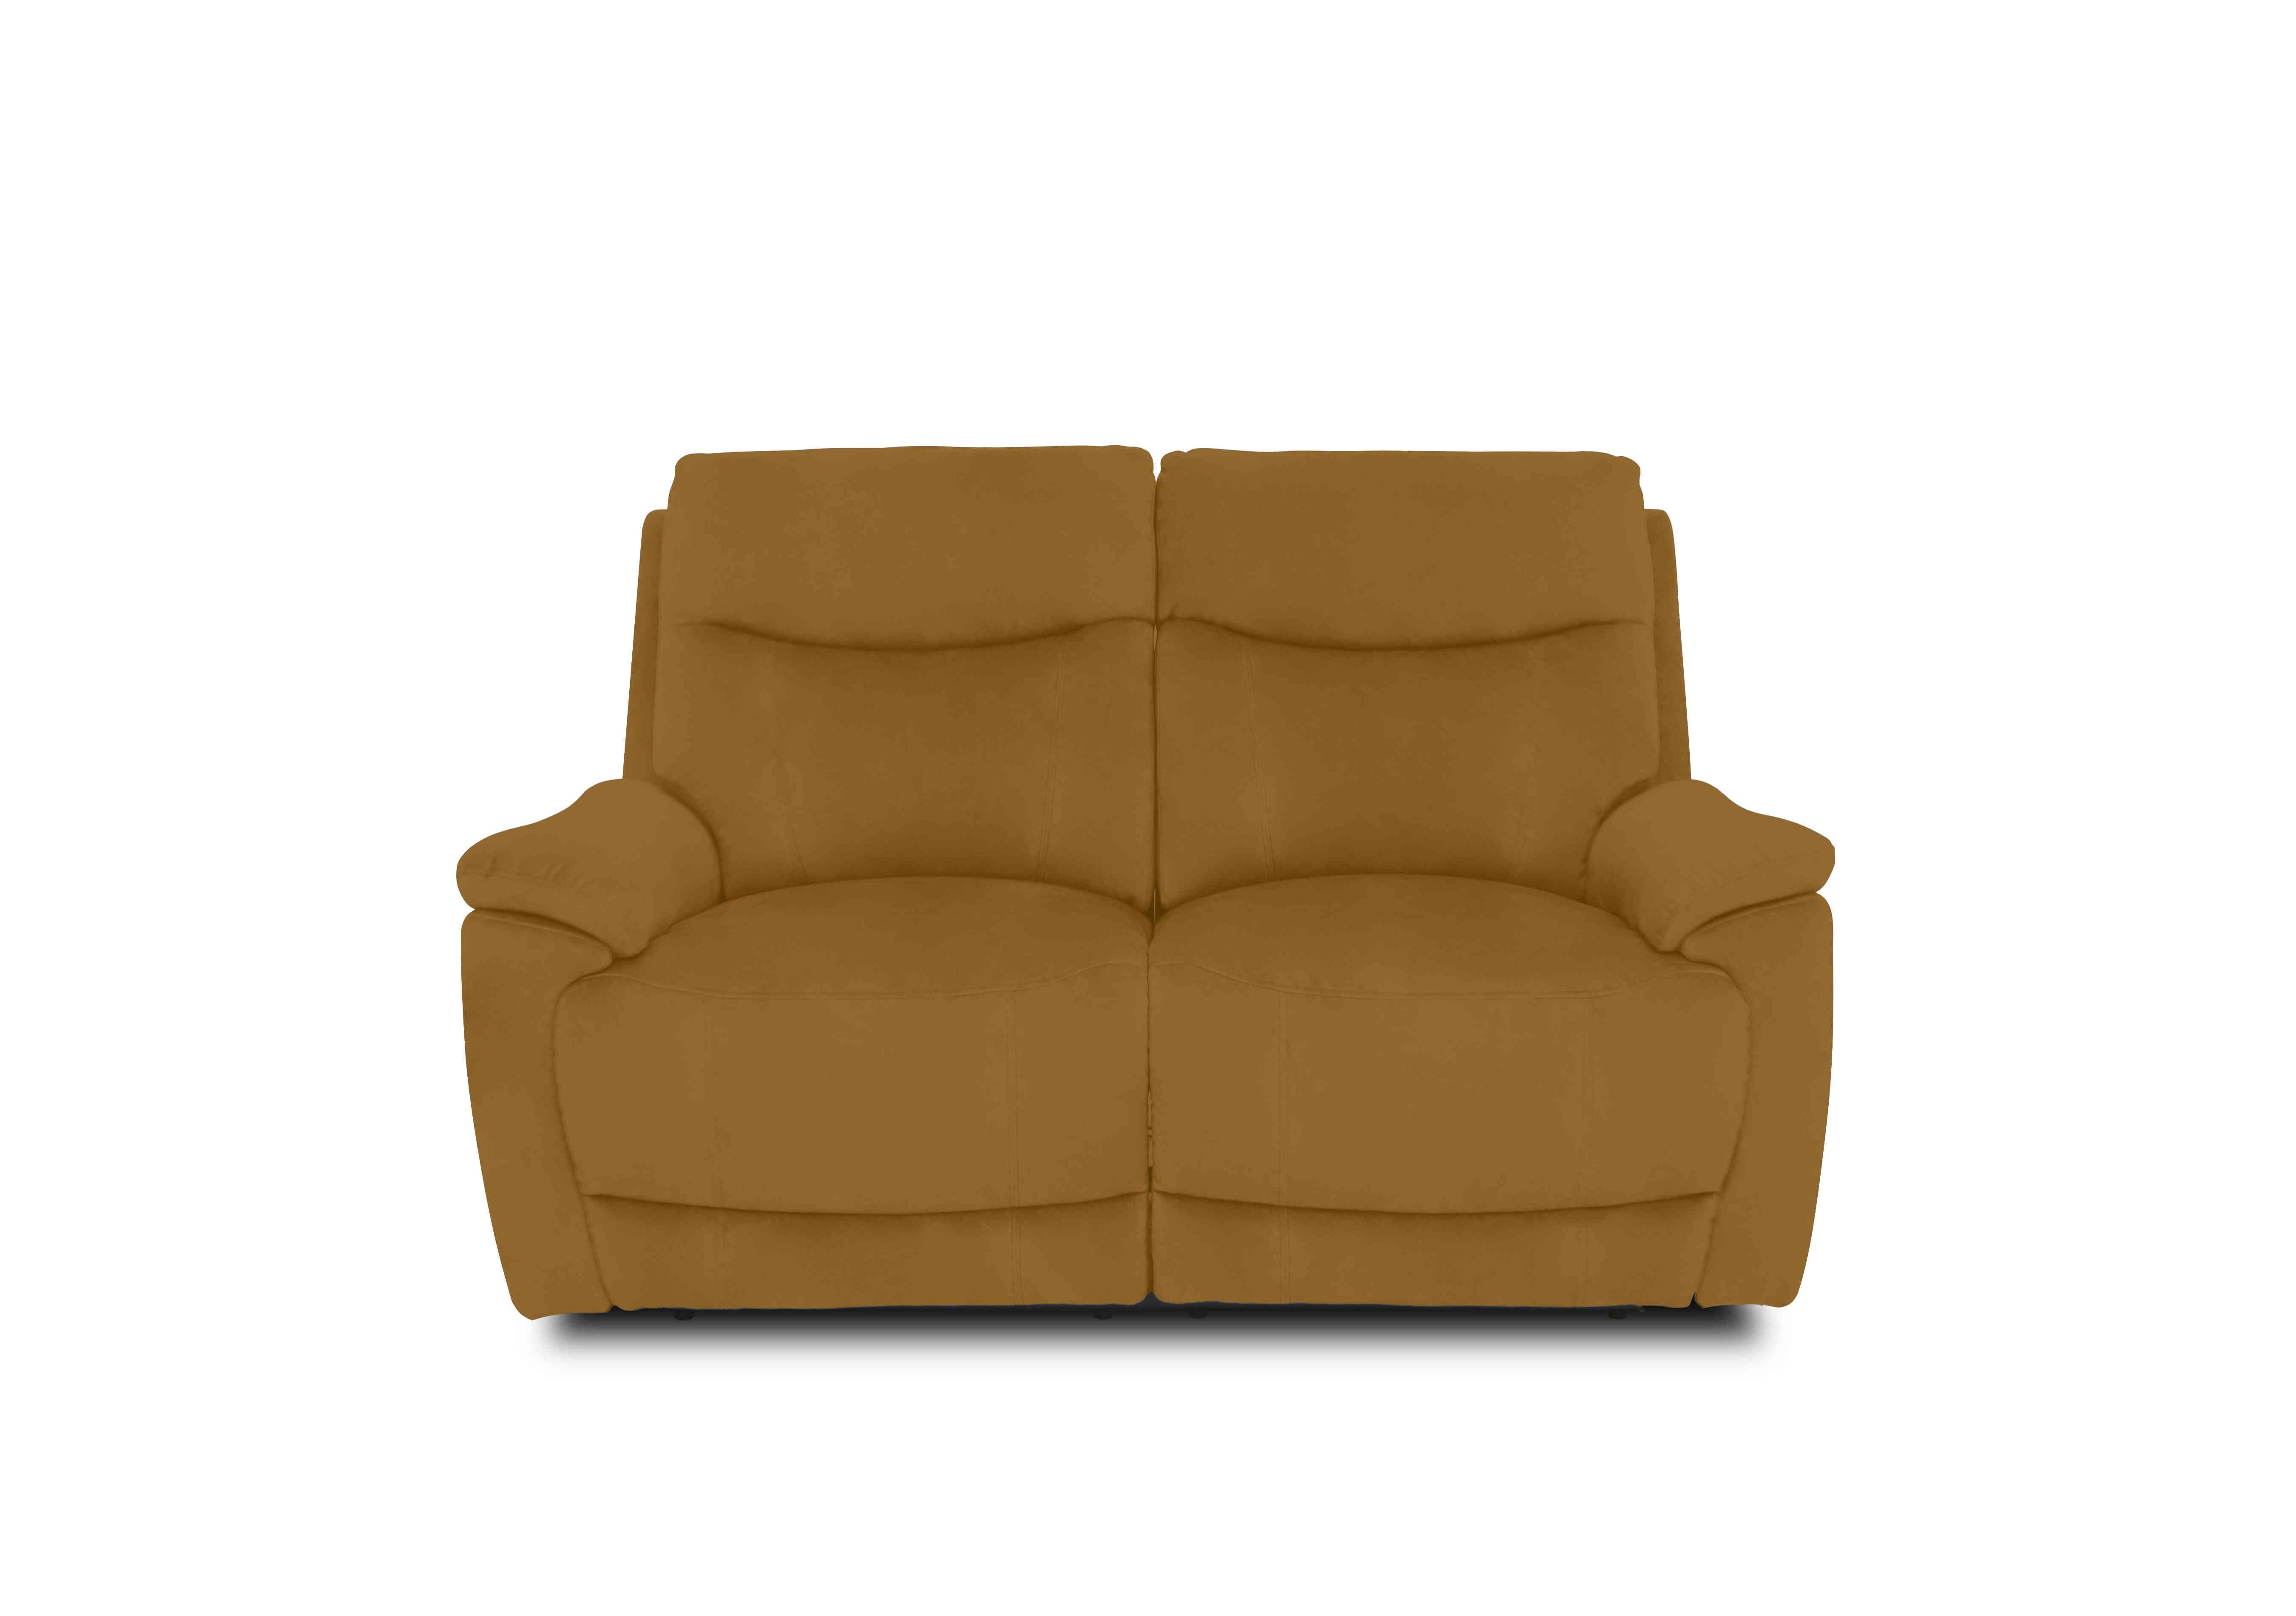 Sloane 2 Seater Fabric Sofa in 51009 Opulence Saffron on Furniture Village